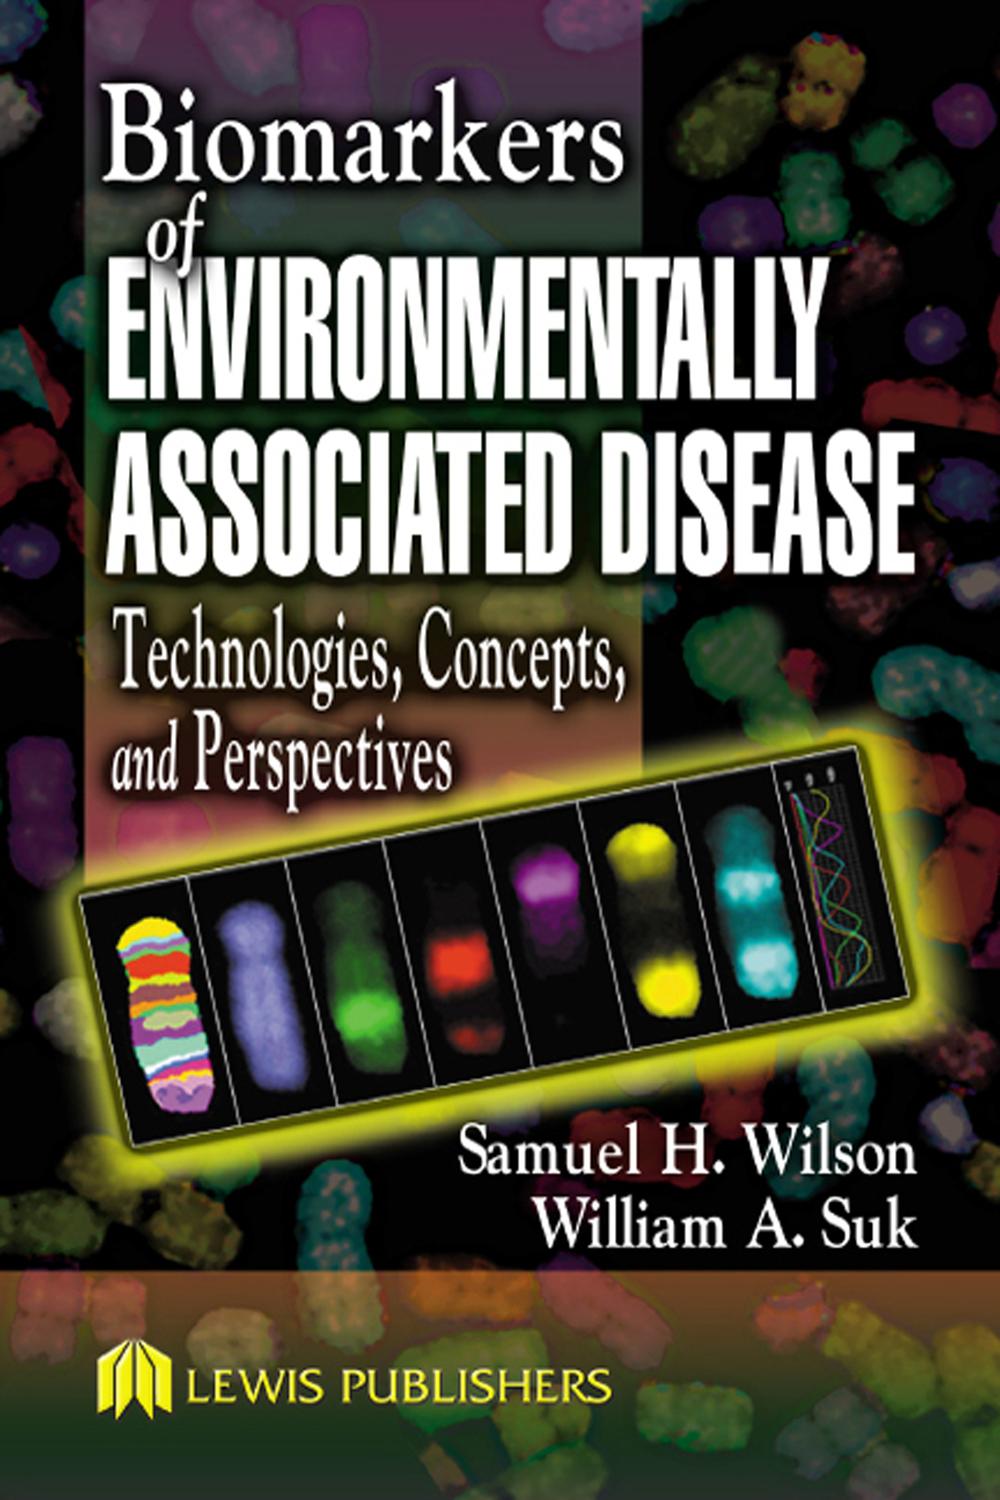 Biomarkers of Environmentally Associated Disease - Samuel H. Wilson, William A. Suk